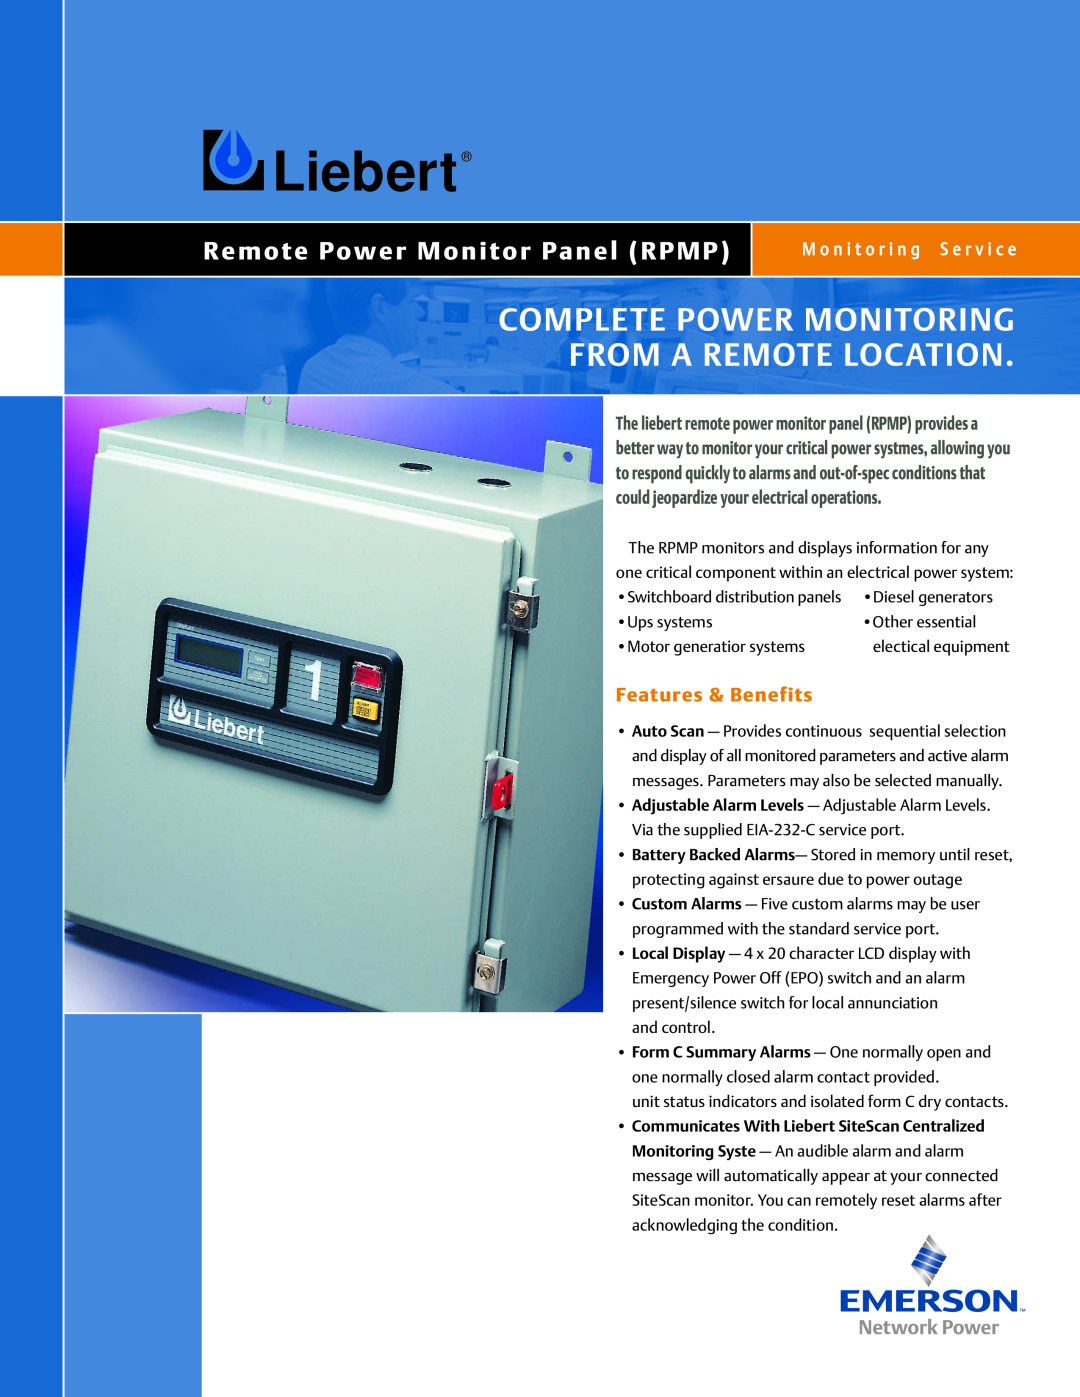 Emerson manual Remote Power Monitor Panel RPMP, Features & Benefits, M o n i t o r i n g S e r v i c e, Liebert 